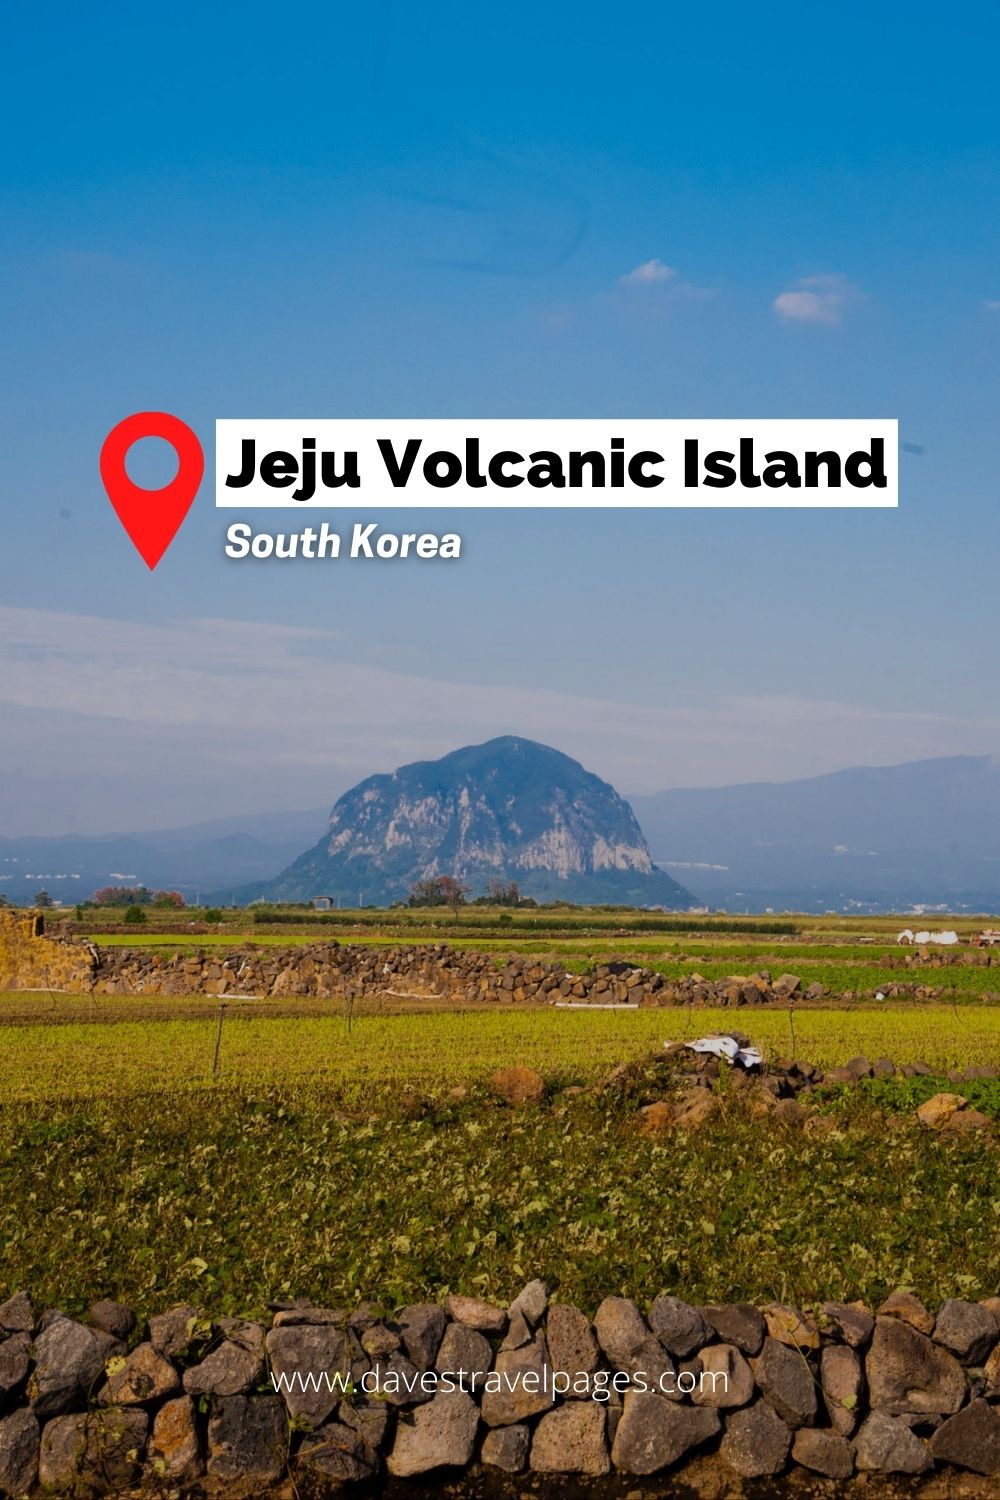 Jeju is a popular destination in South Korea